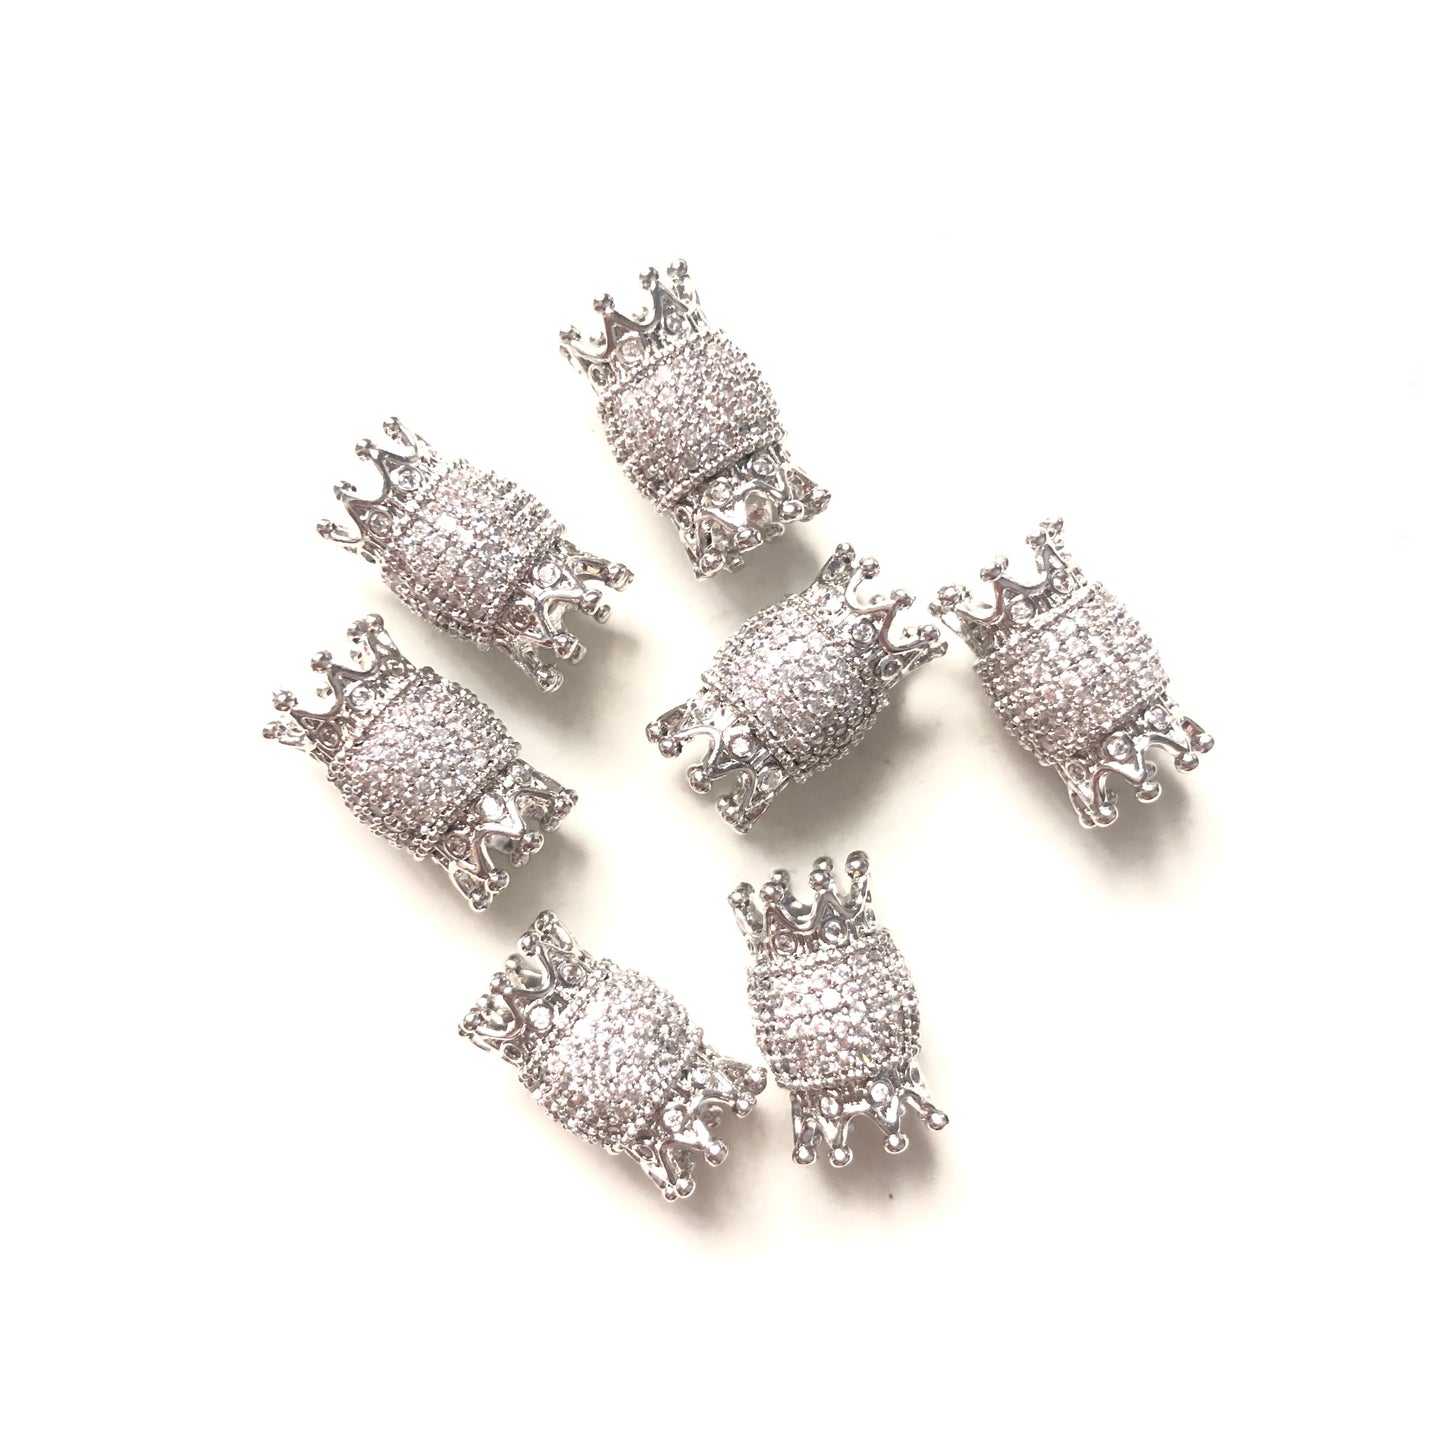 10pcs/lot 16*9mm CZ Paved Double Crown Spacers Silver CZ Paved Spacers Crown Beads Charms Beads Beyond